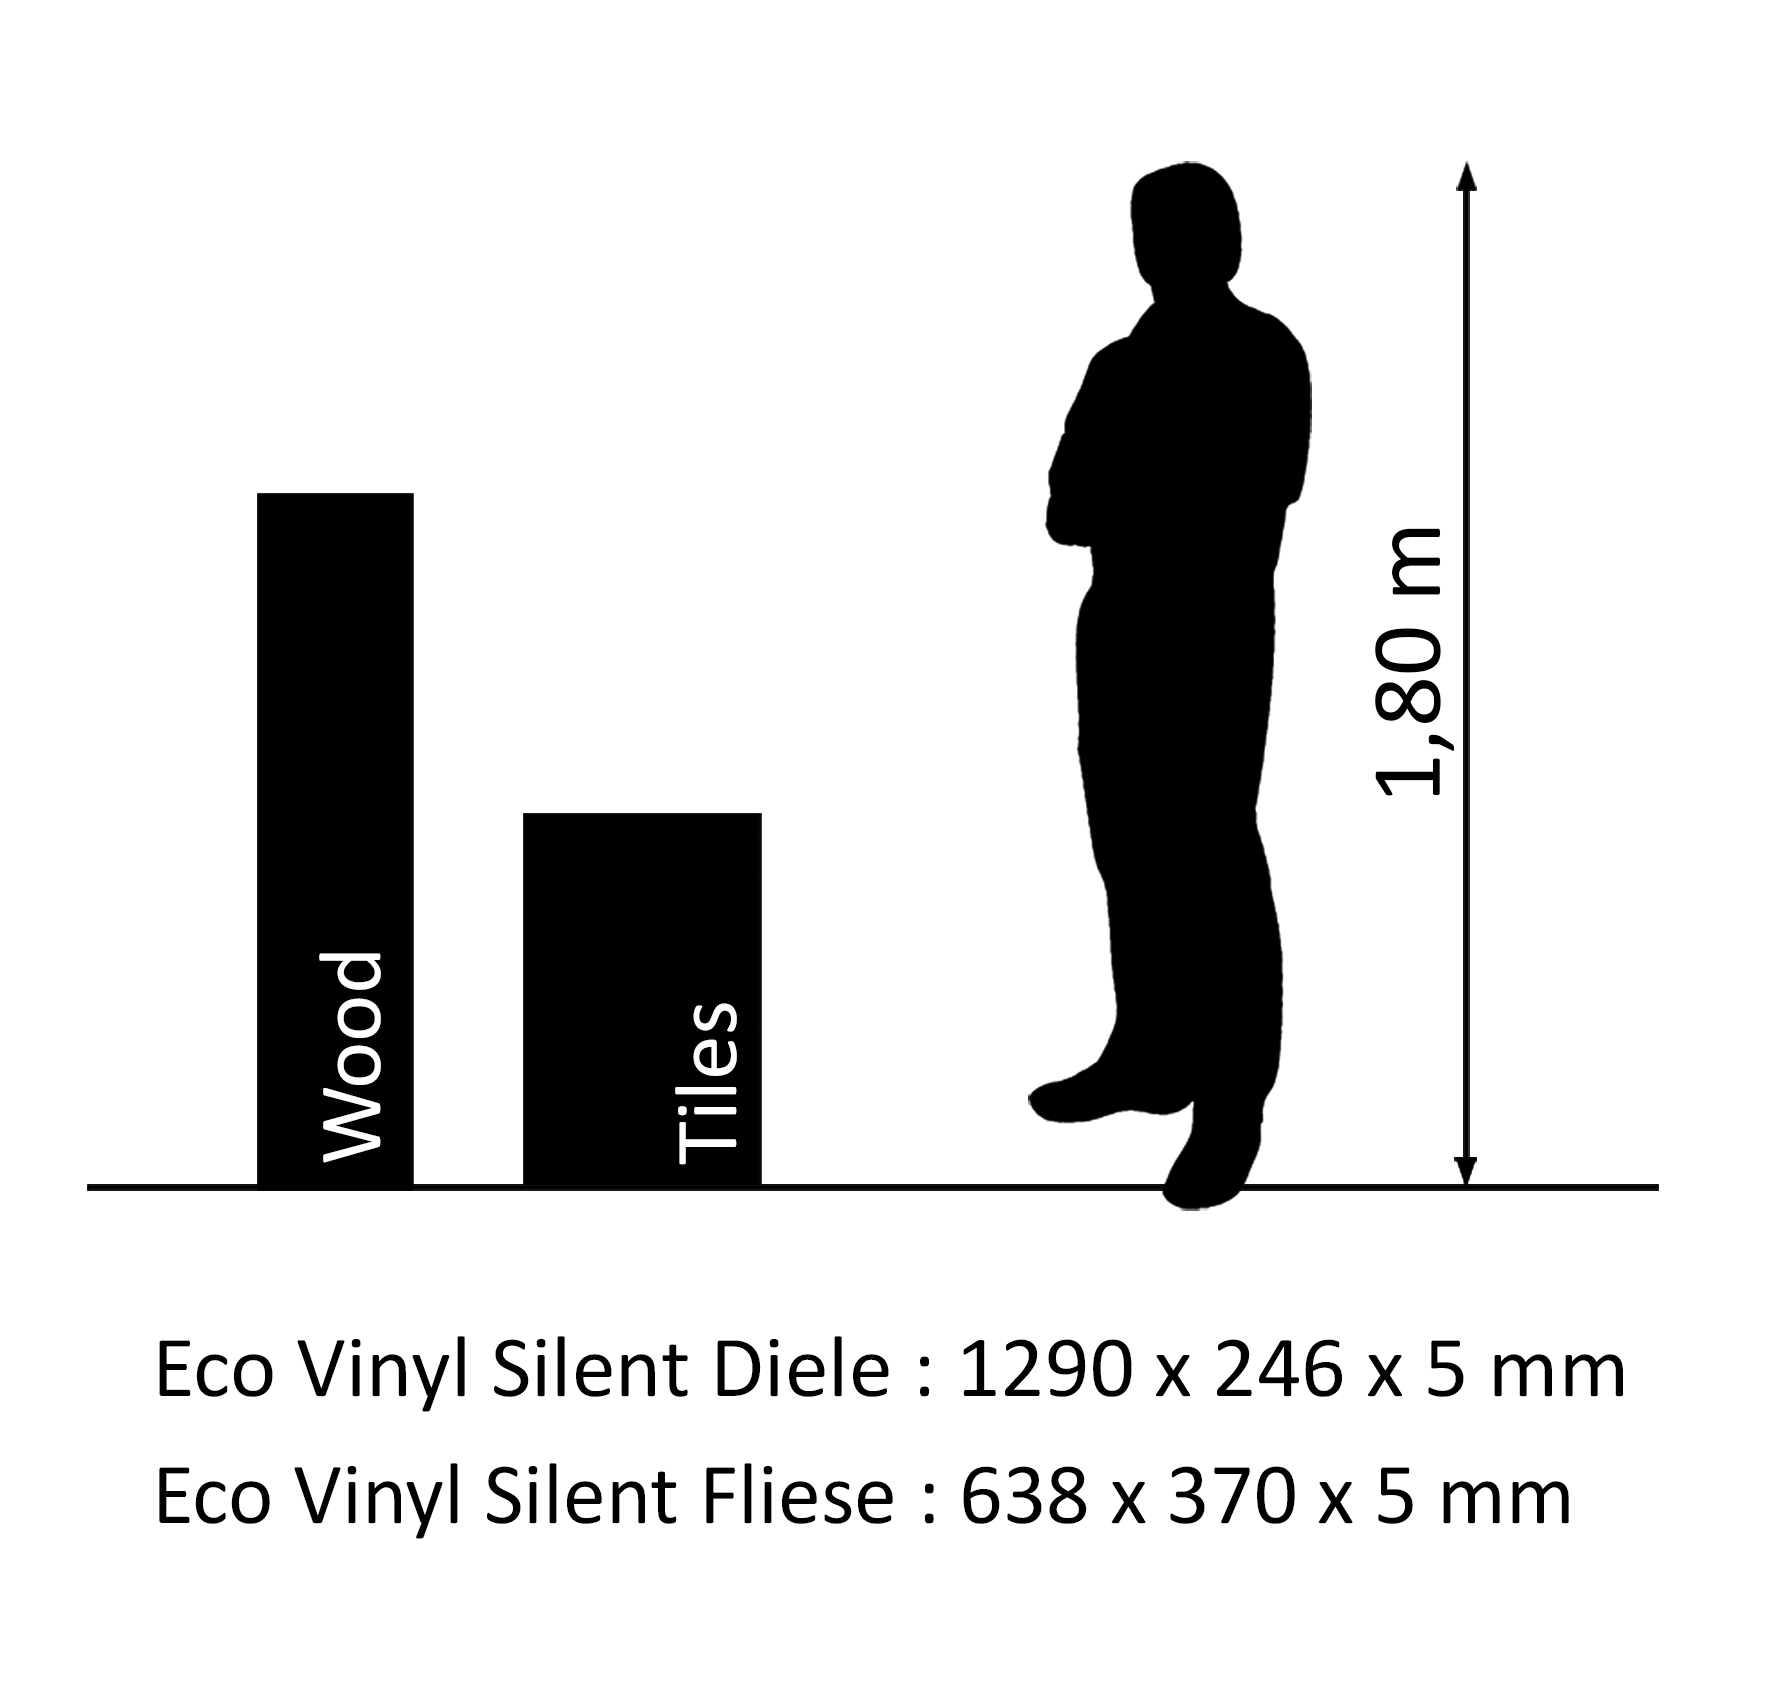 Eco Vinyl Silent Masai Mara vinylfloor 